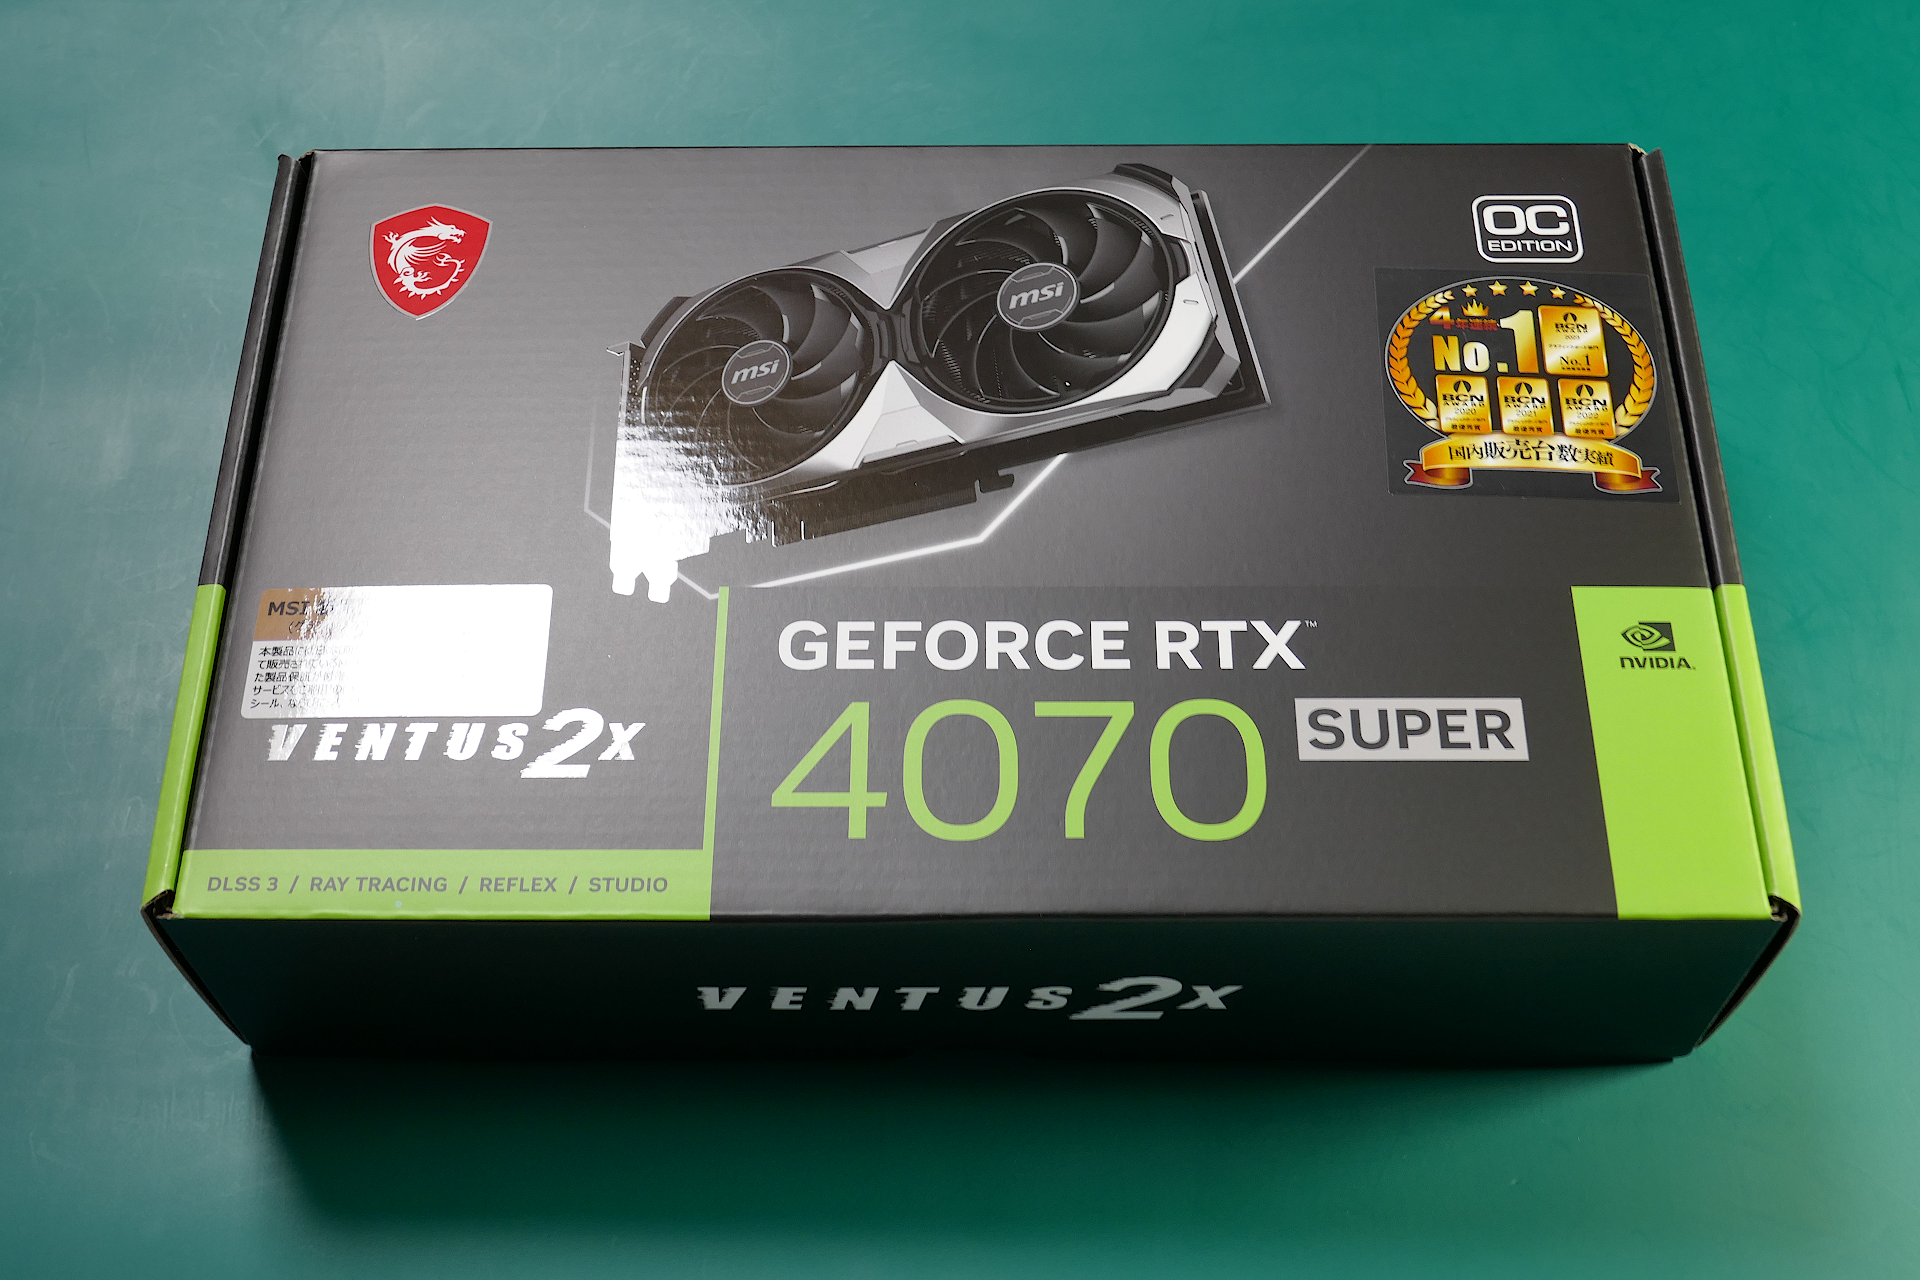 MSI GeForce RTX 4070 SUPER 12G VENTUS 2X OCグラフィクス カードの箱を撮影した写真。